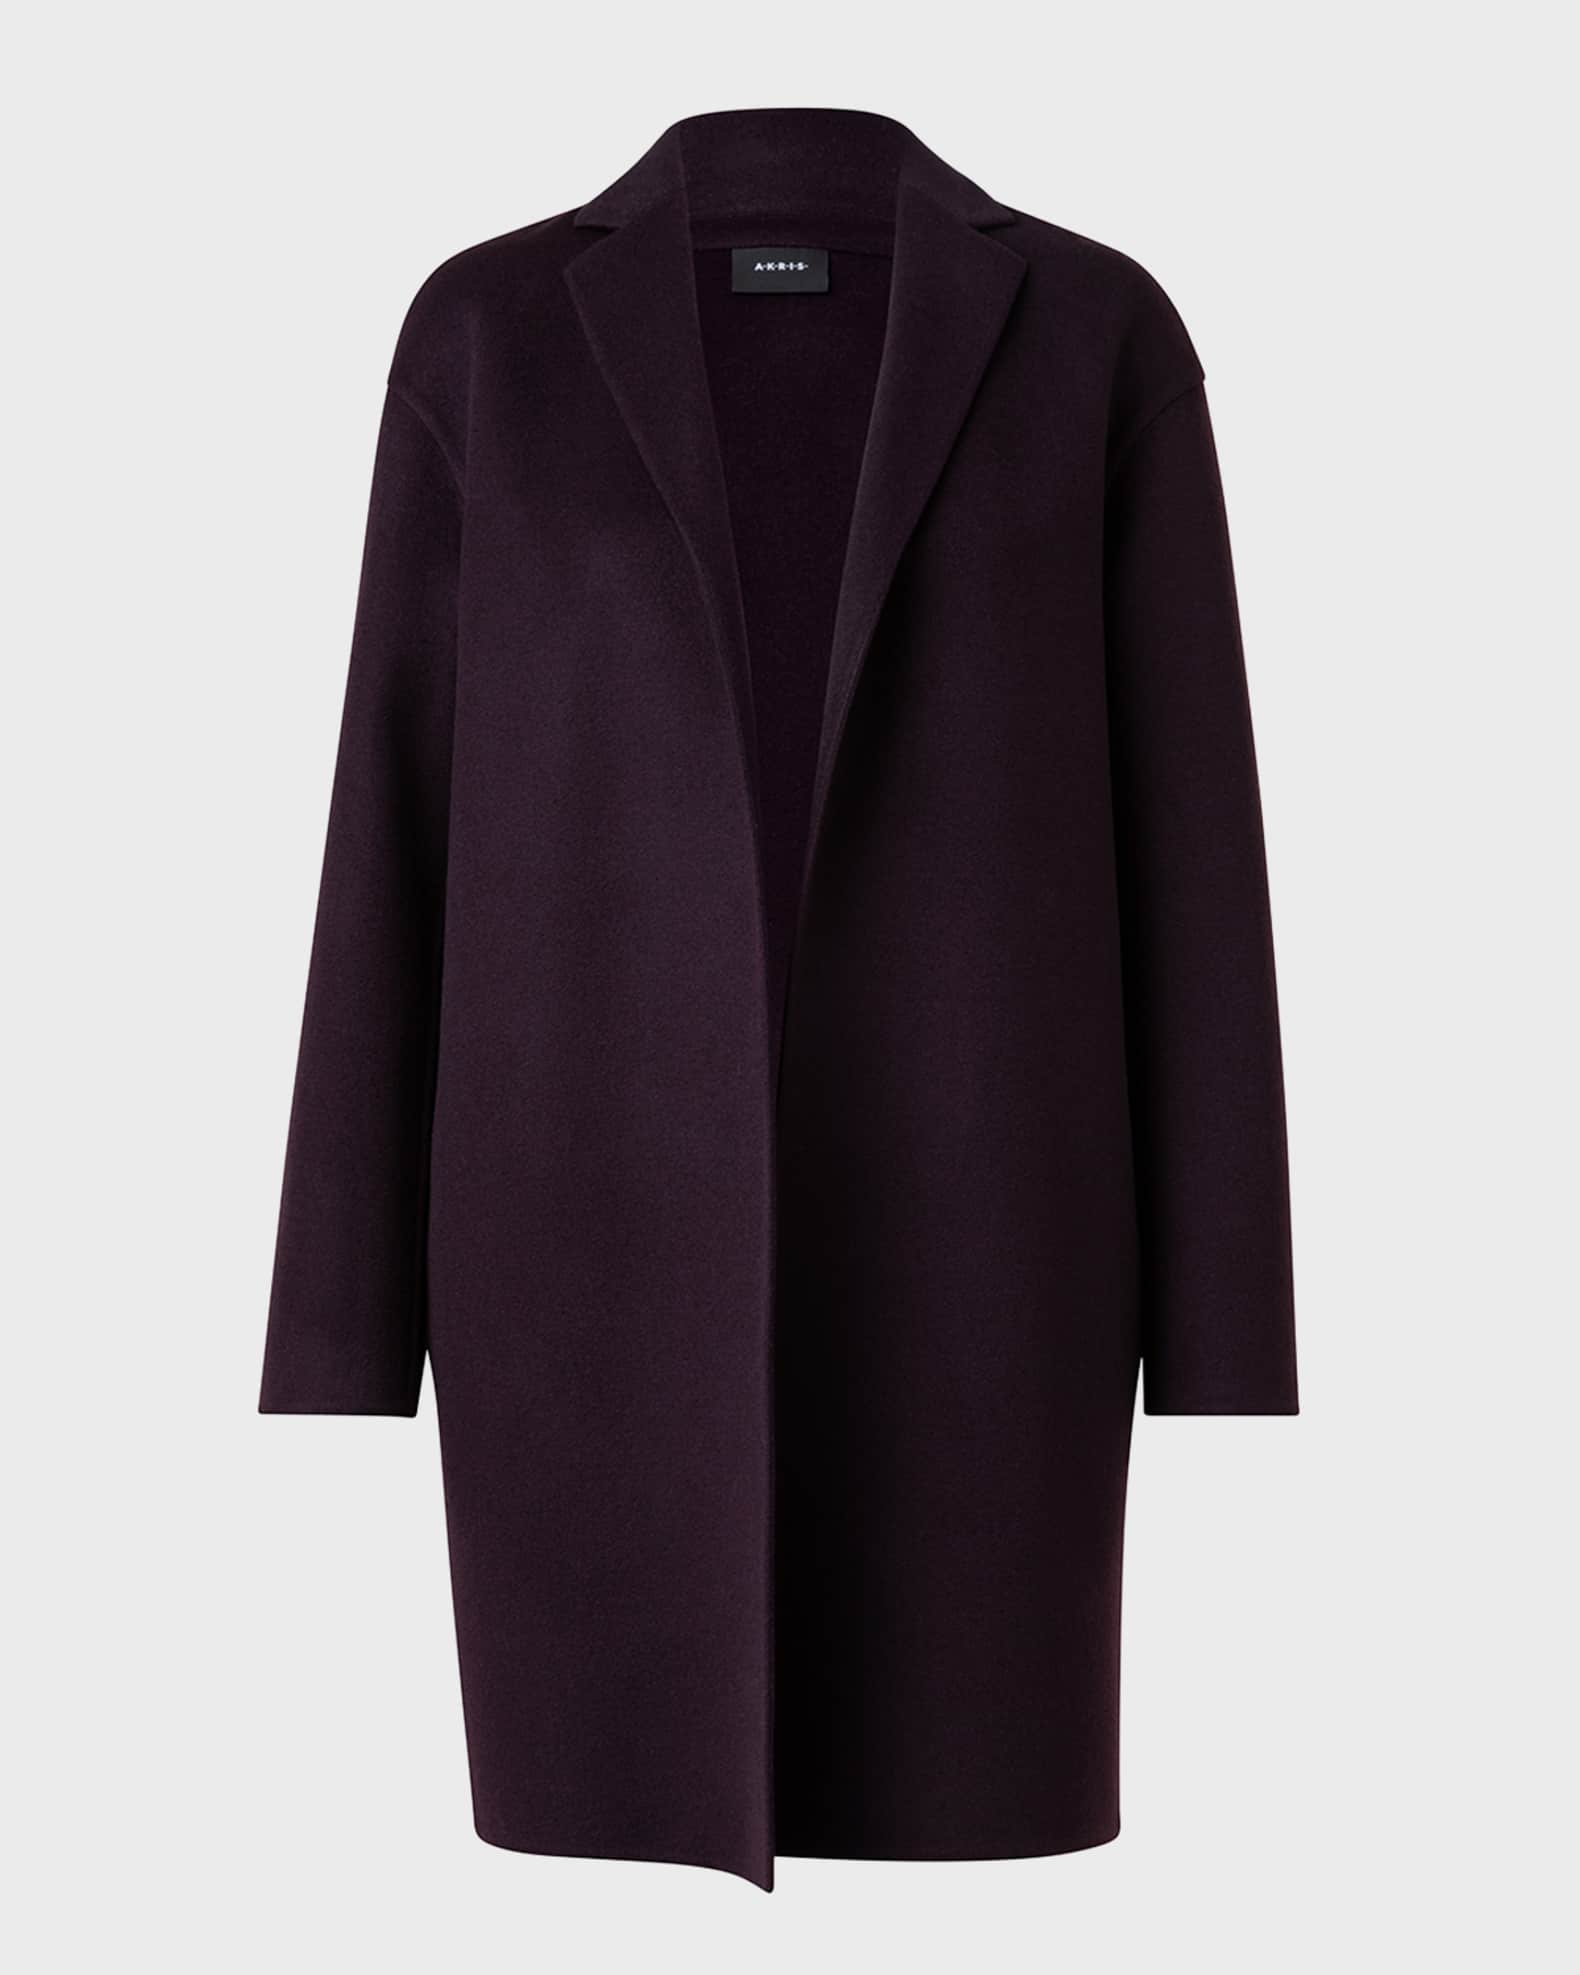 Akris Two-Tone Cashmere Top Coat | Neiman Marcus